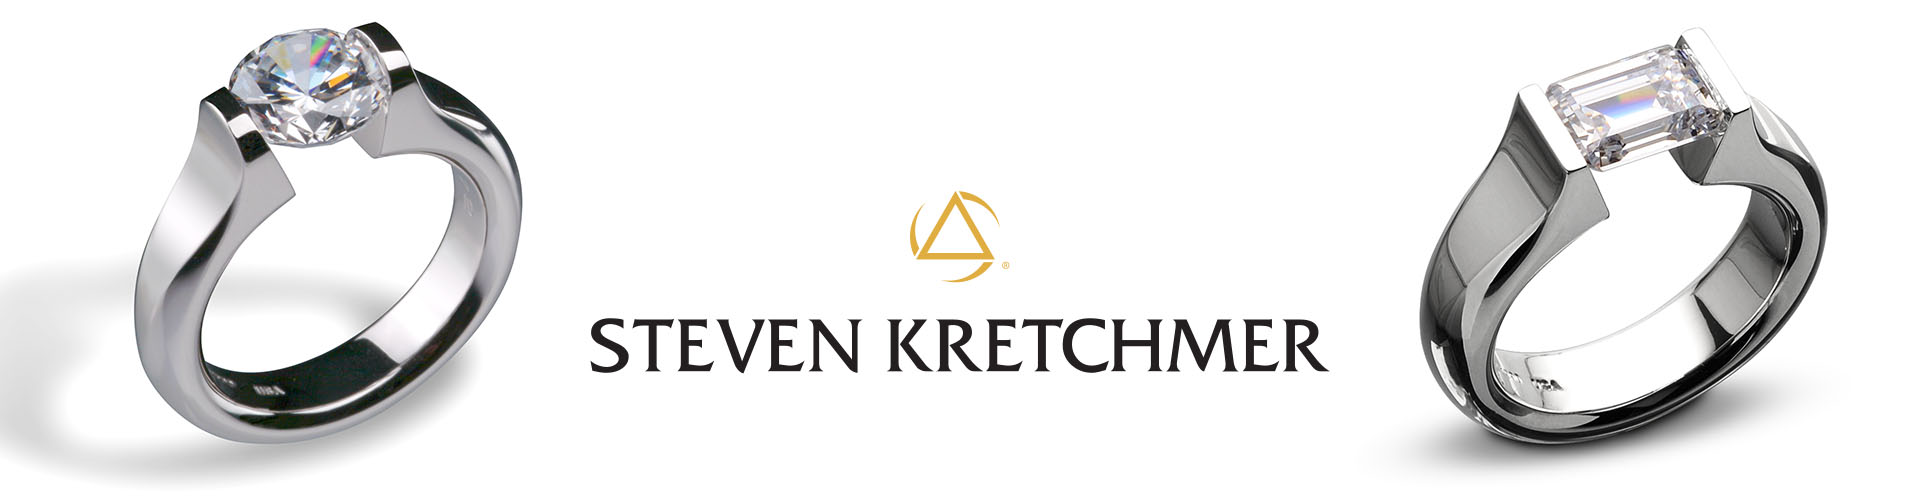 Steven Kretchmer Tension Set, Engagement Rings, Authorized Retailer